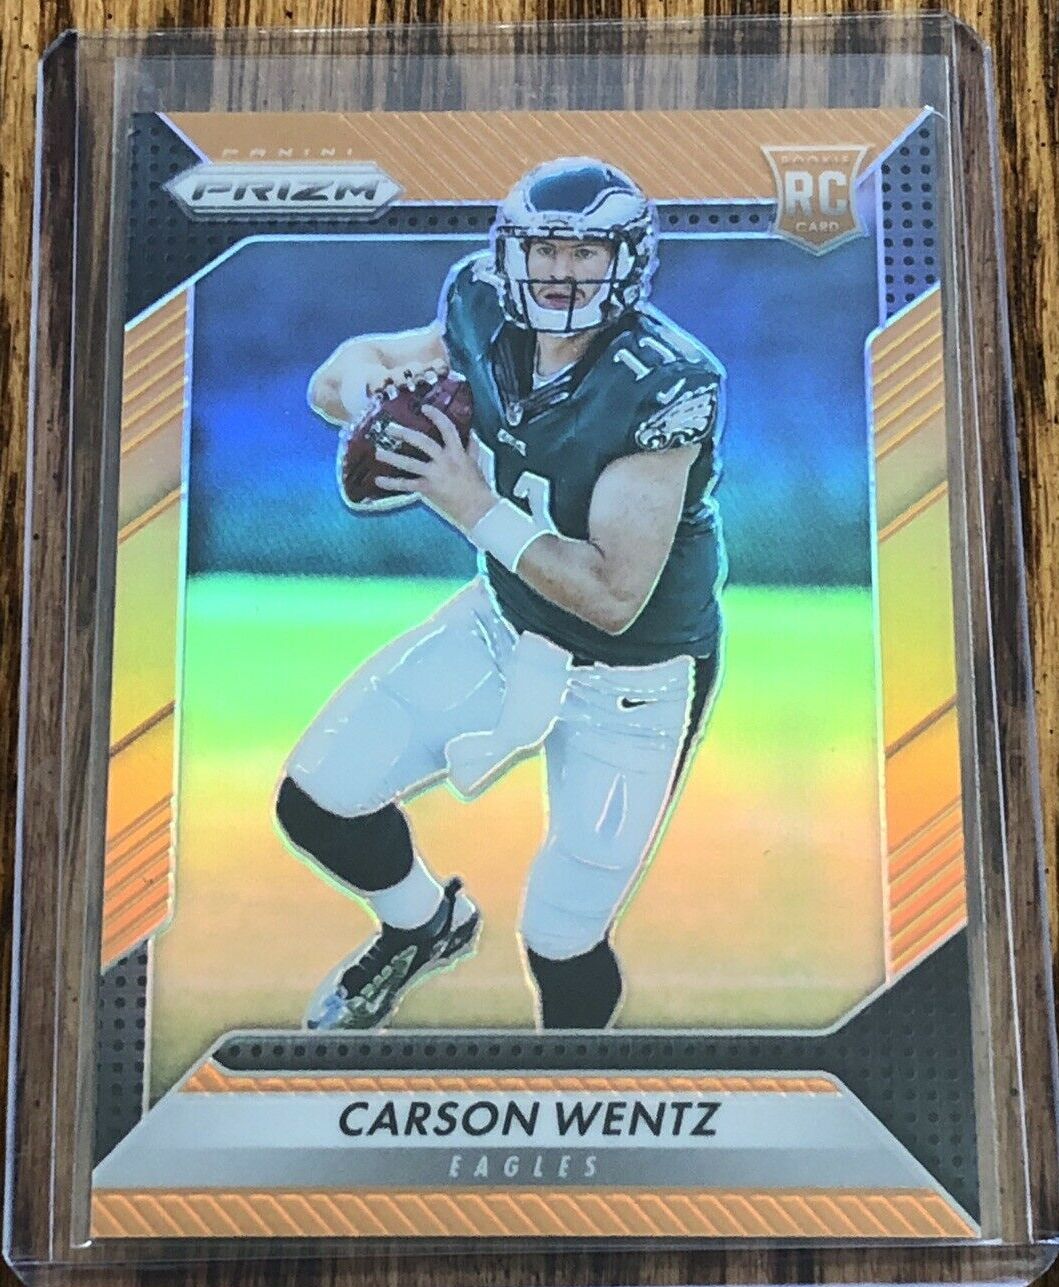 Image of 2016 Prizm Carson Wentz Orange RC /299 sports trading card